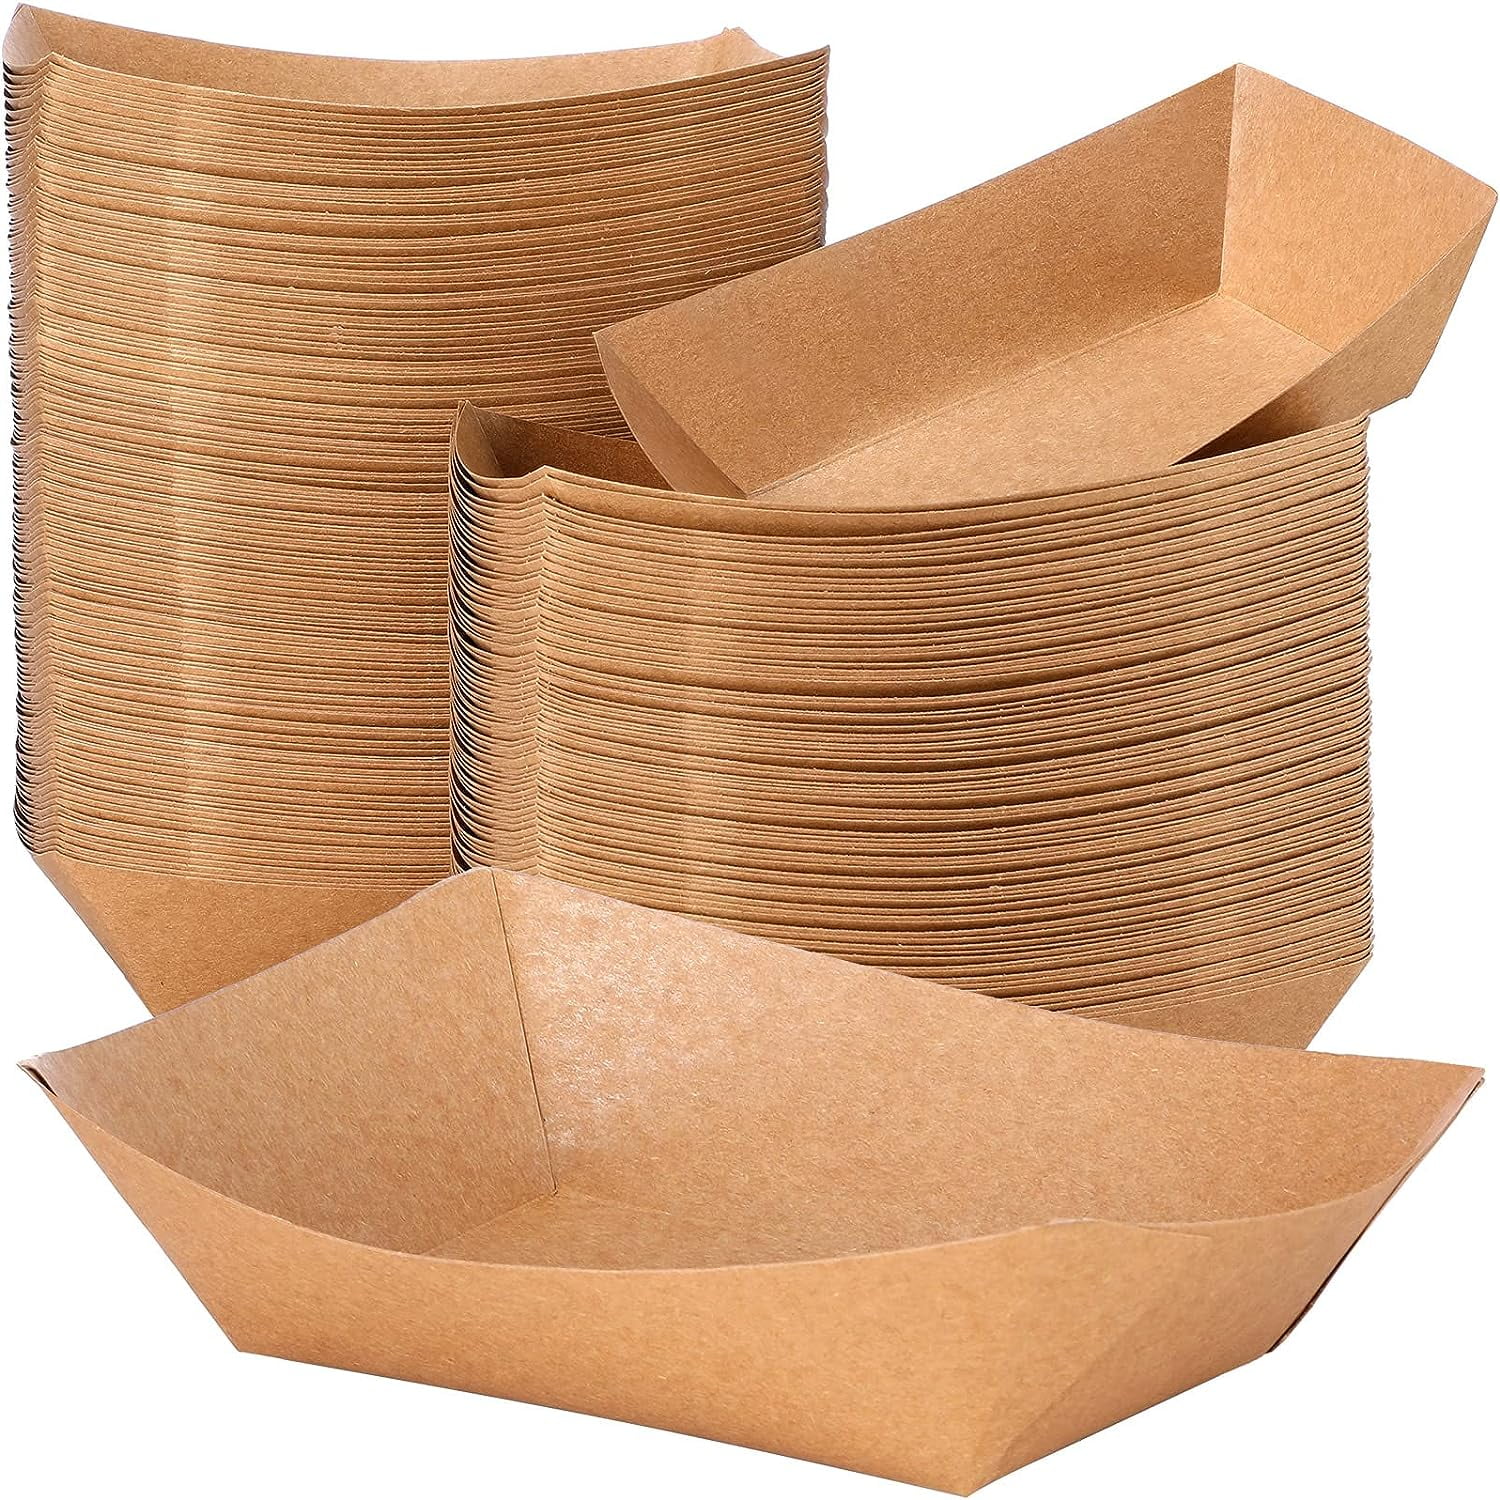  DEAYOU 50 Pack Paper Food Trays, 4 Corner Pop Up Kraft